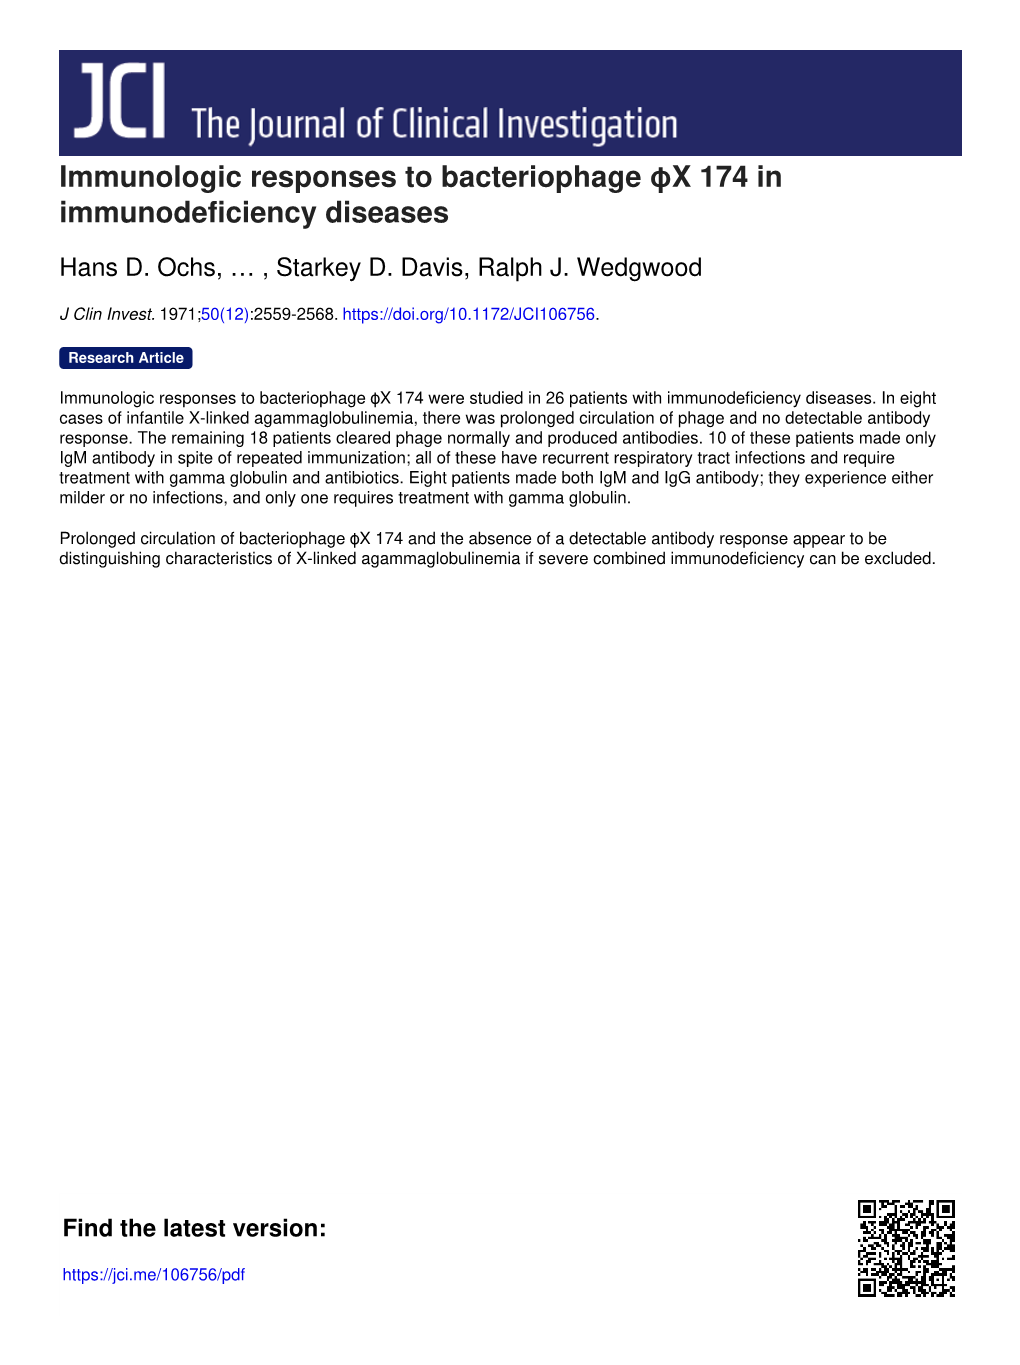 Immunologic Responses to Bacteriophage Φx 174 in Immunodeficiency Diseases